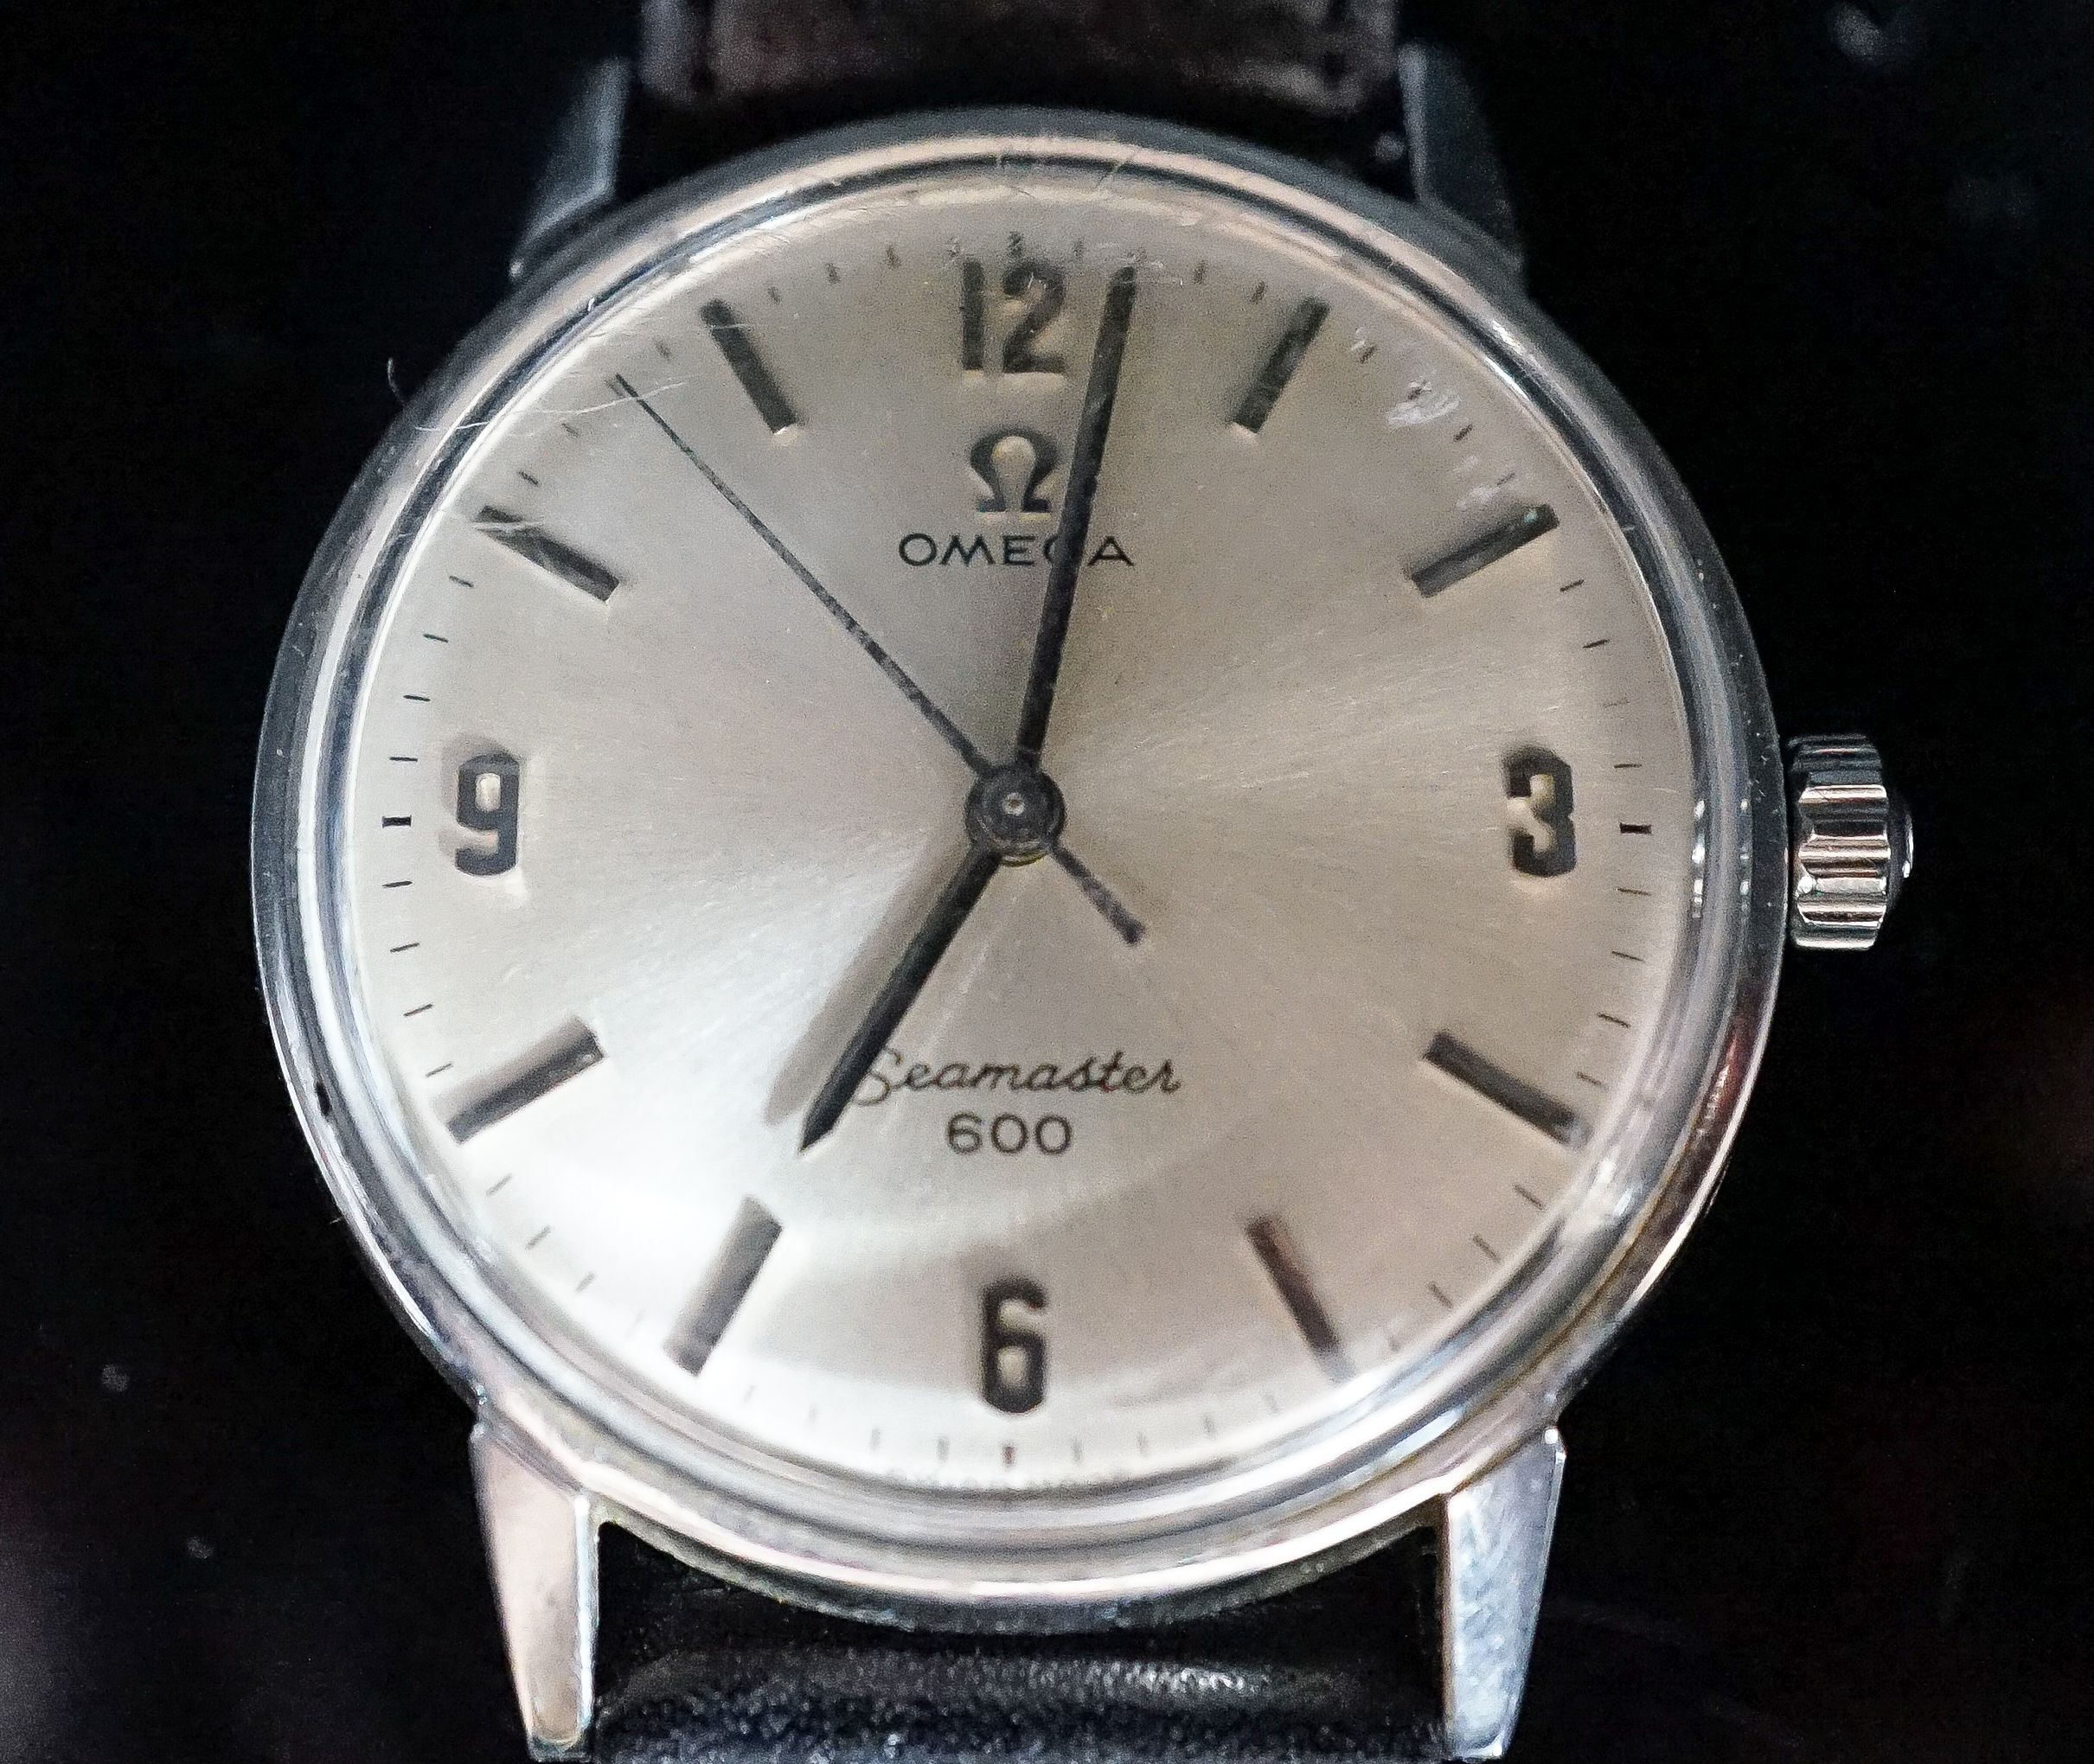 A gentleman's stainless steel Omega Seamaster 600 manual wind wrist watch, on associated strap. case diameter 34mm.